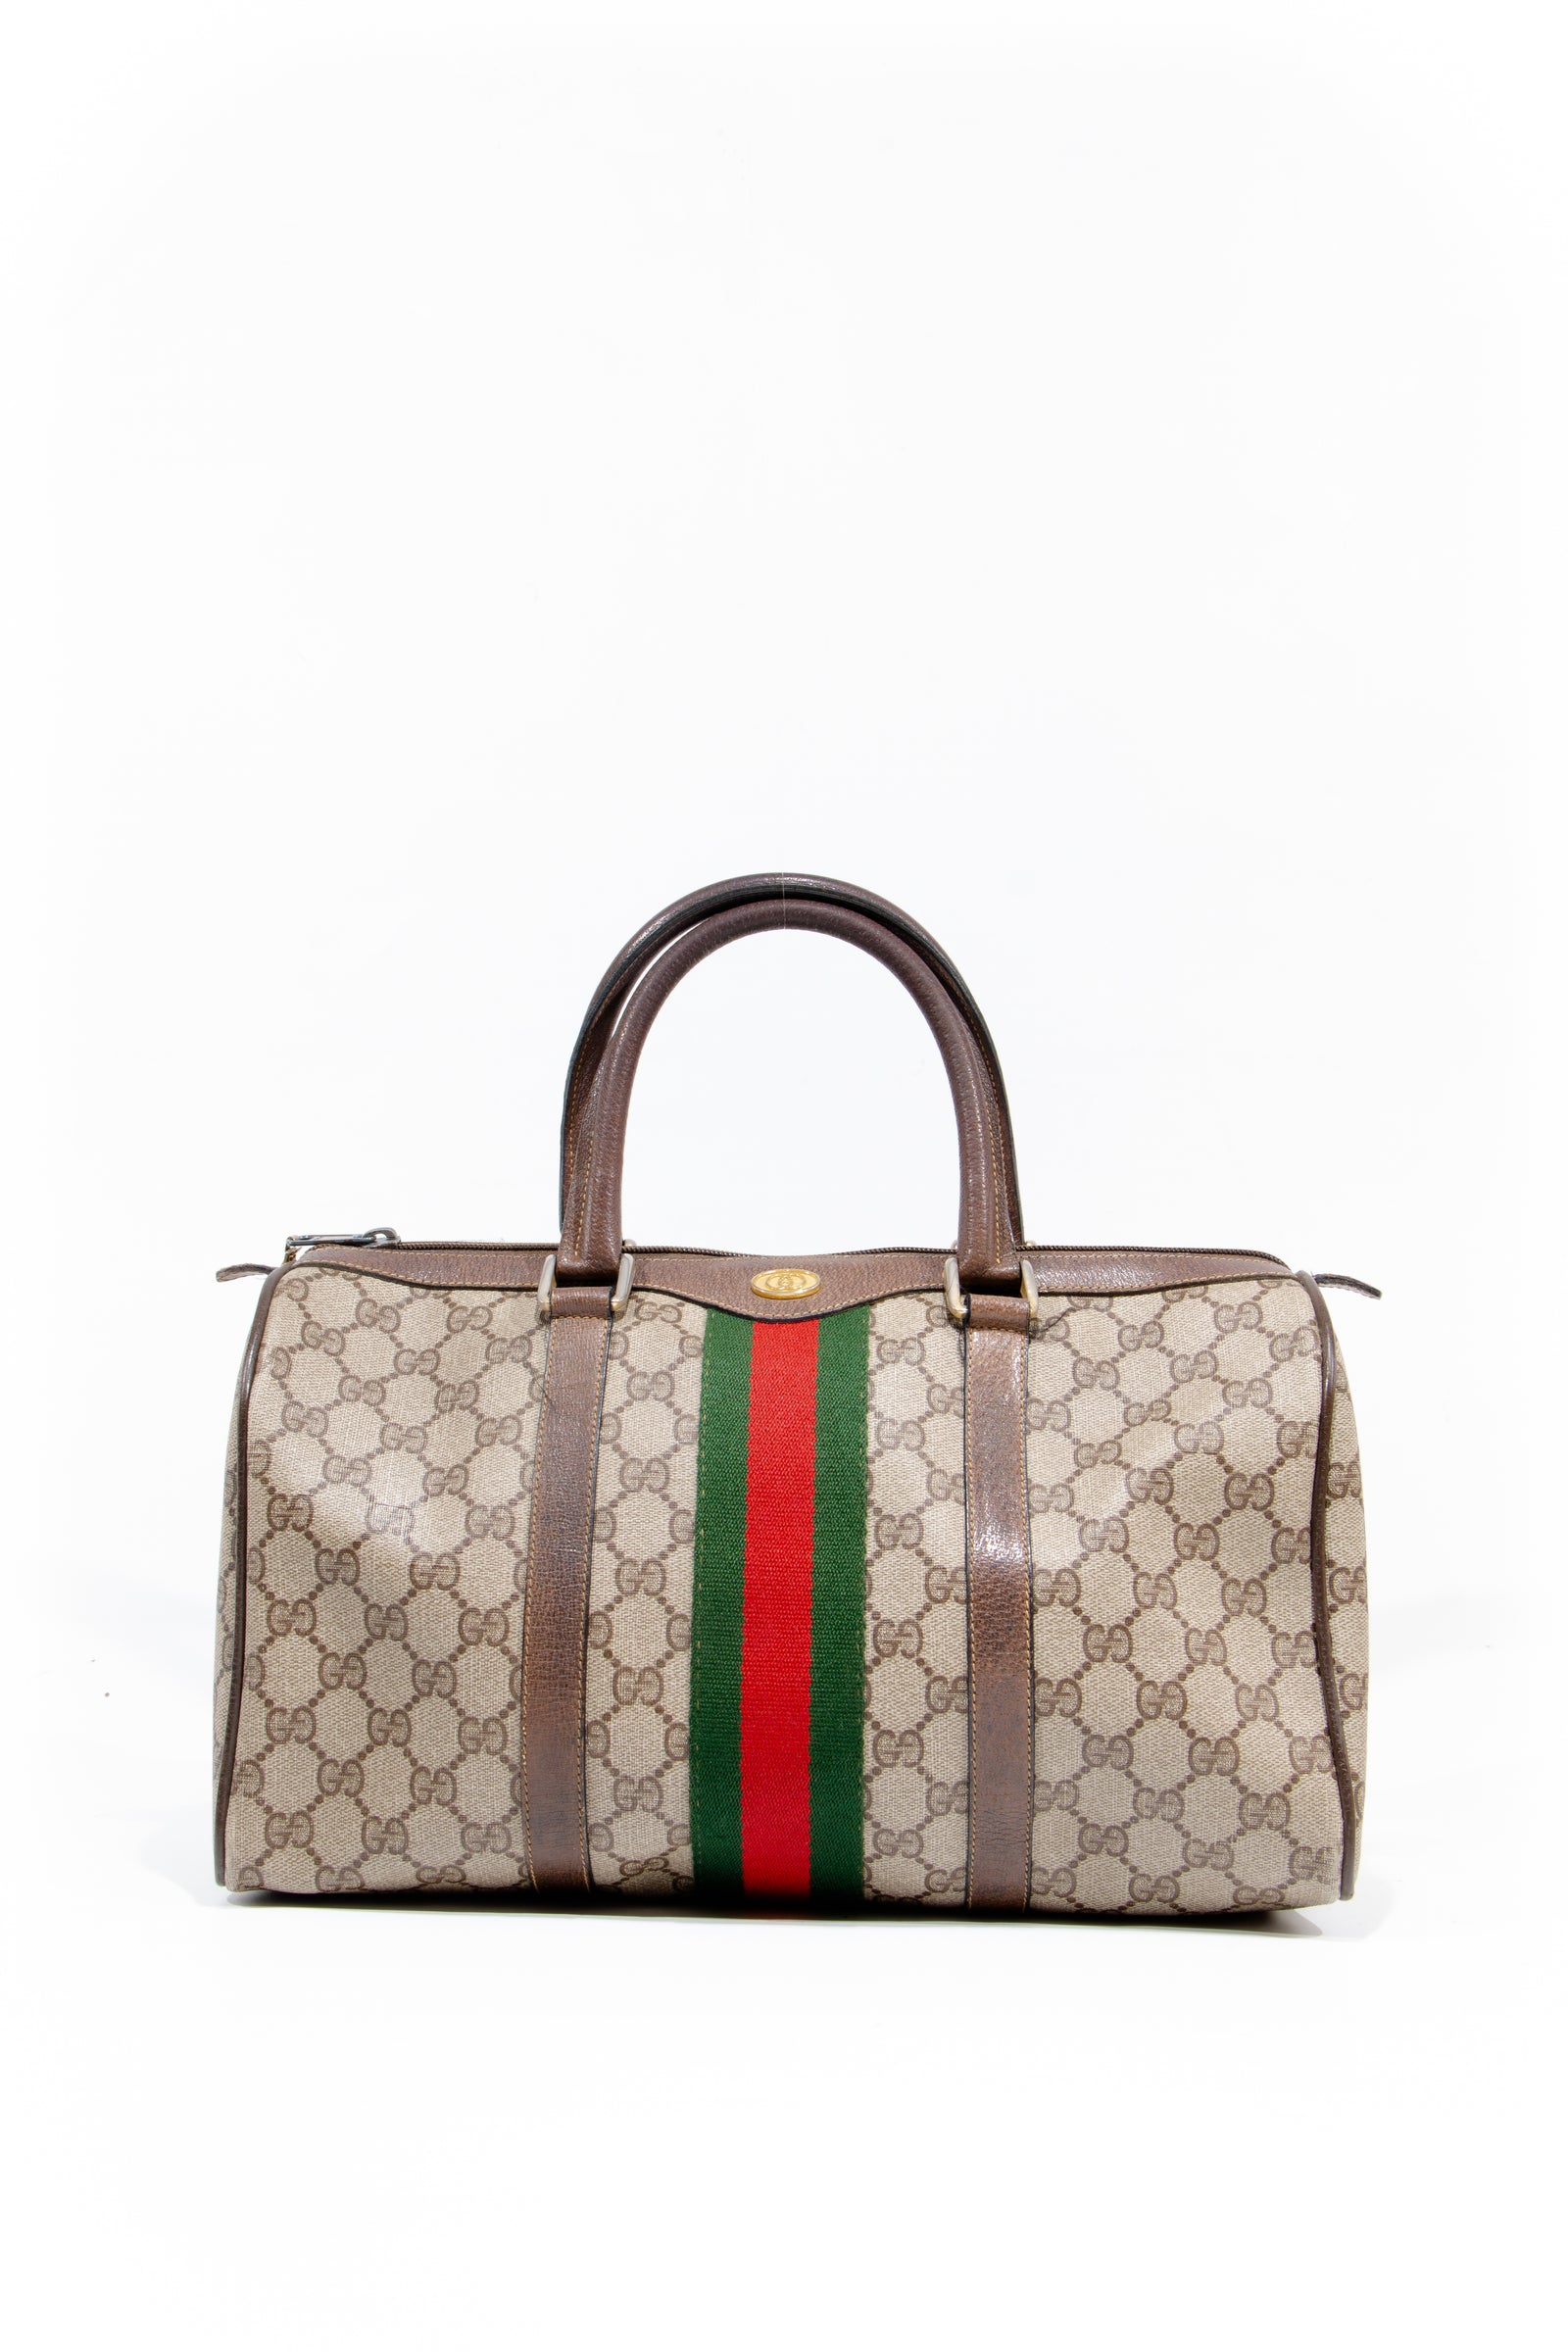 Certified Authentic Gucci Boston Bag Vintage Handbag GG Travel 